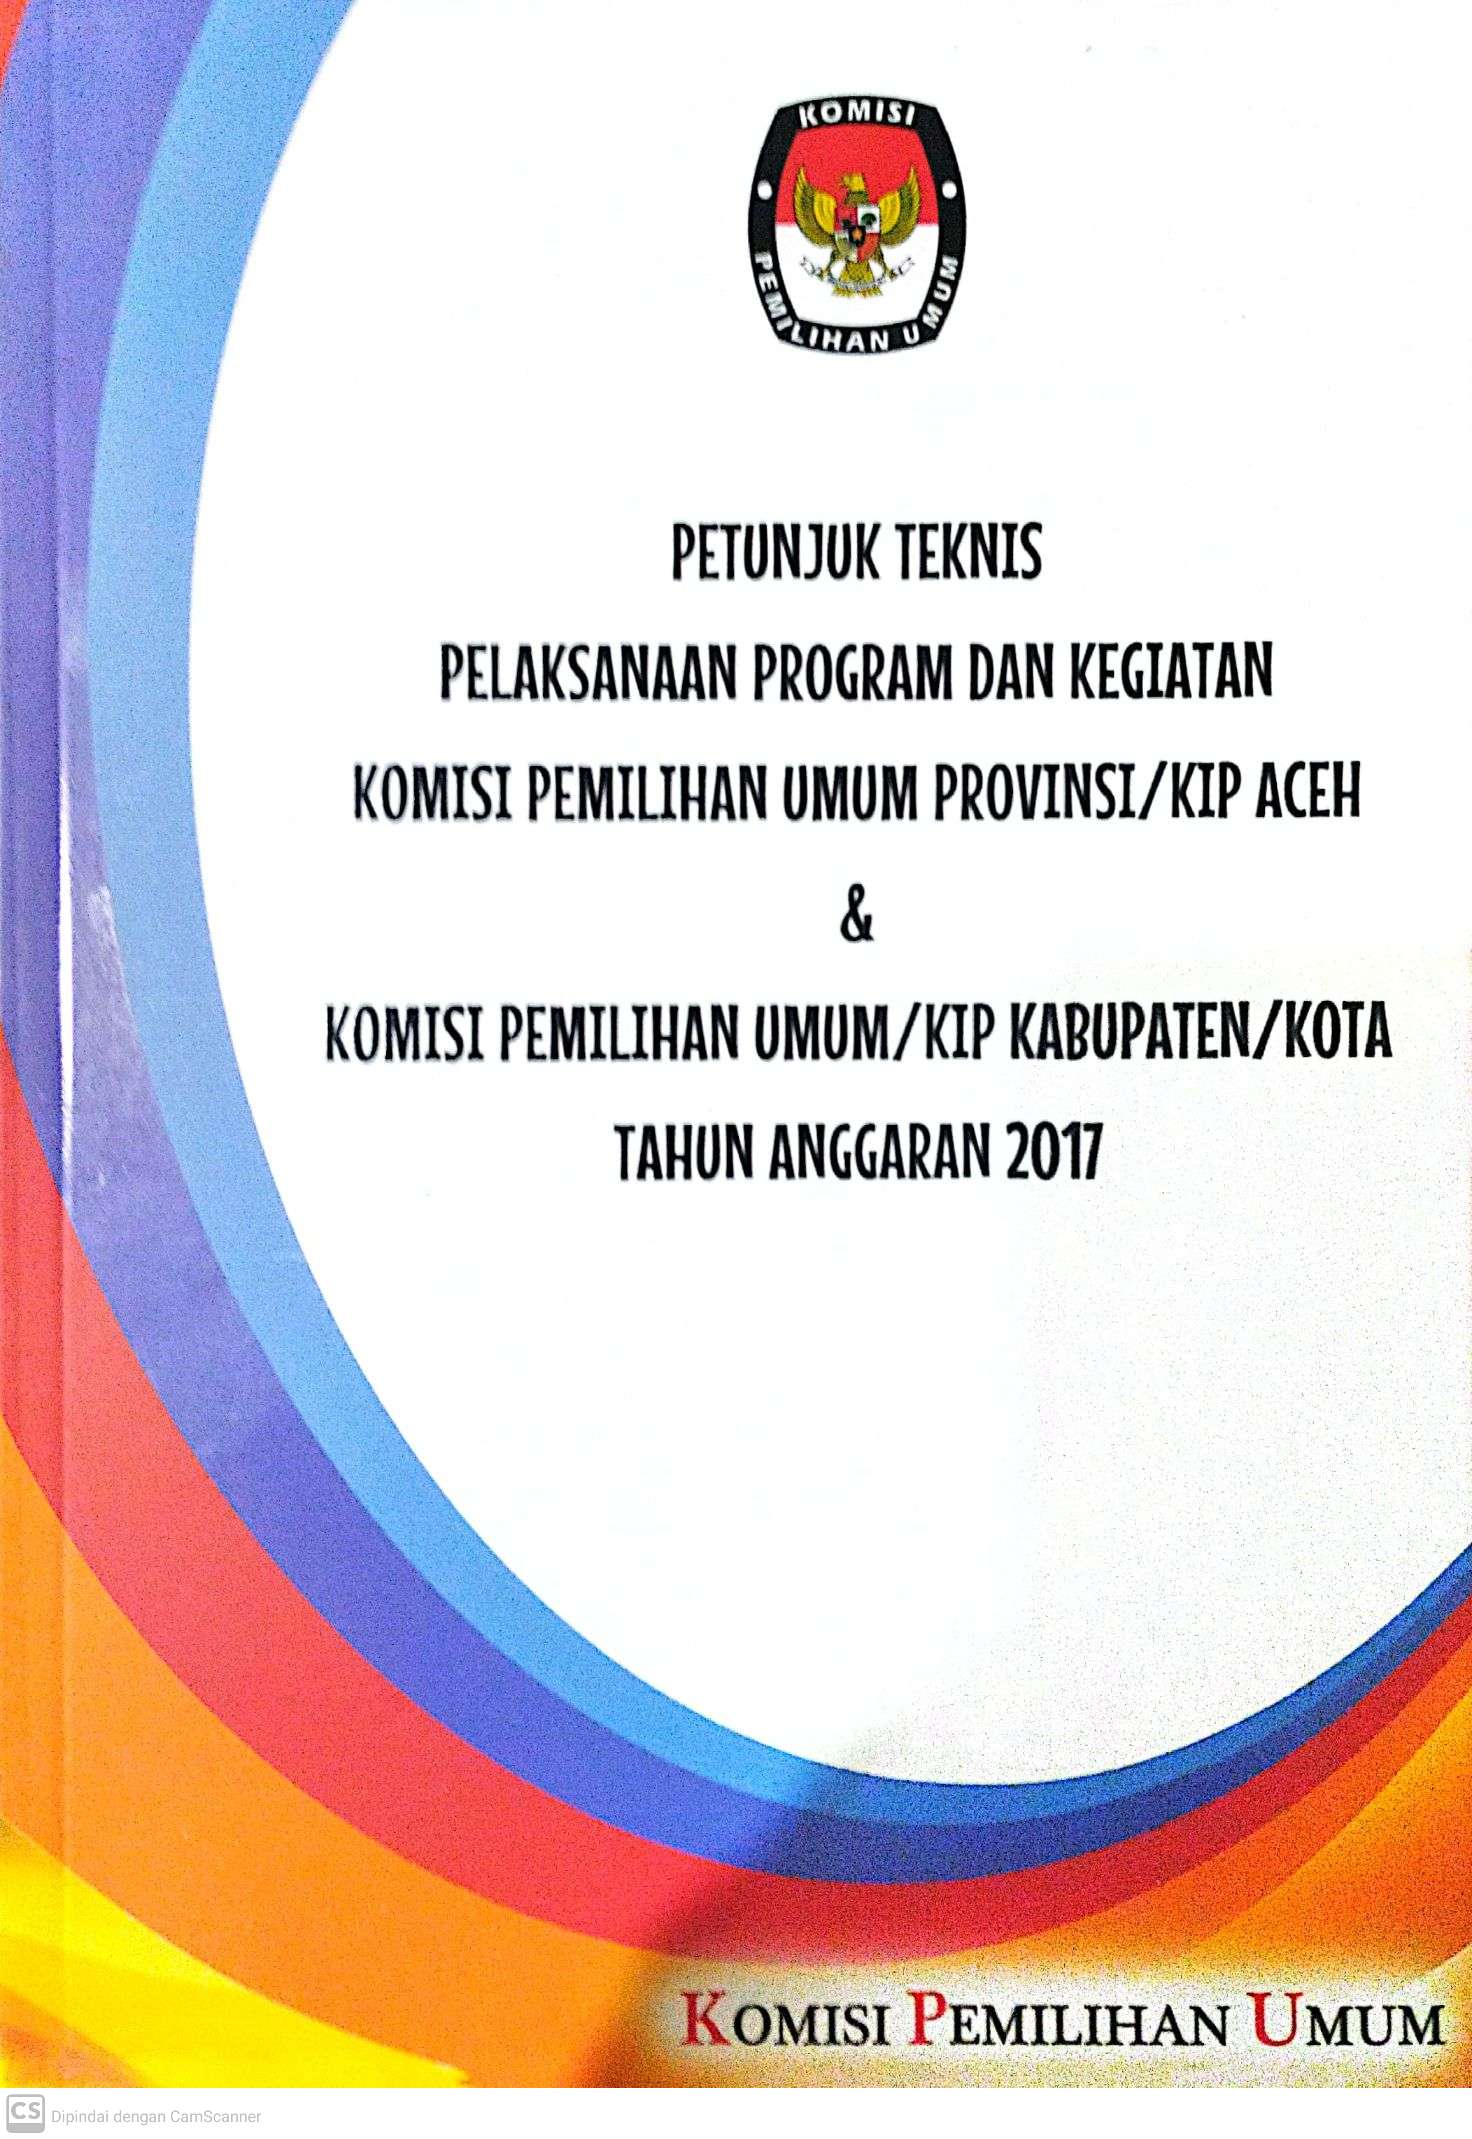 Petunjuk Teknis/ Petunjuk Pelaksanaan Program dan Kegiatan Komisi Pemilihan Umum Provinsi/KIP Aceh & Komisi Pemilihan Umum/KIP Kabupaten/Kota Tahun Anggaran 2017